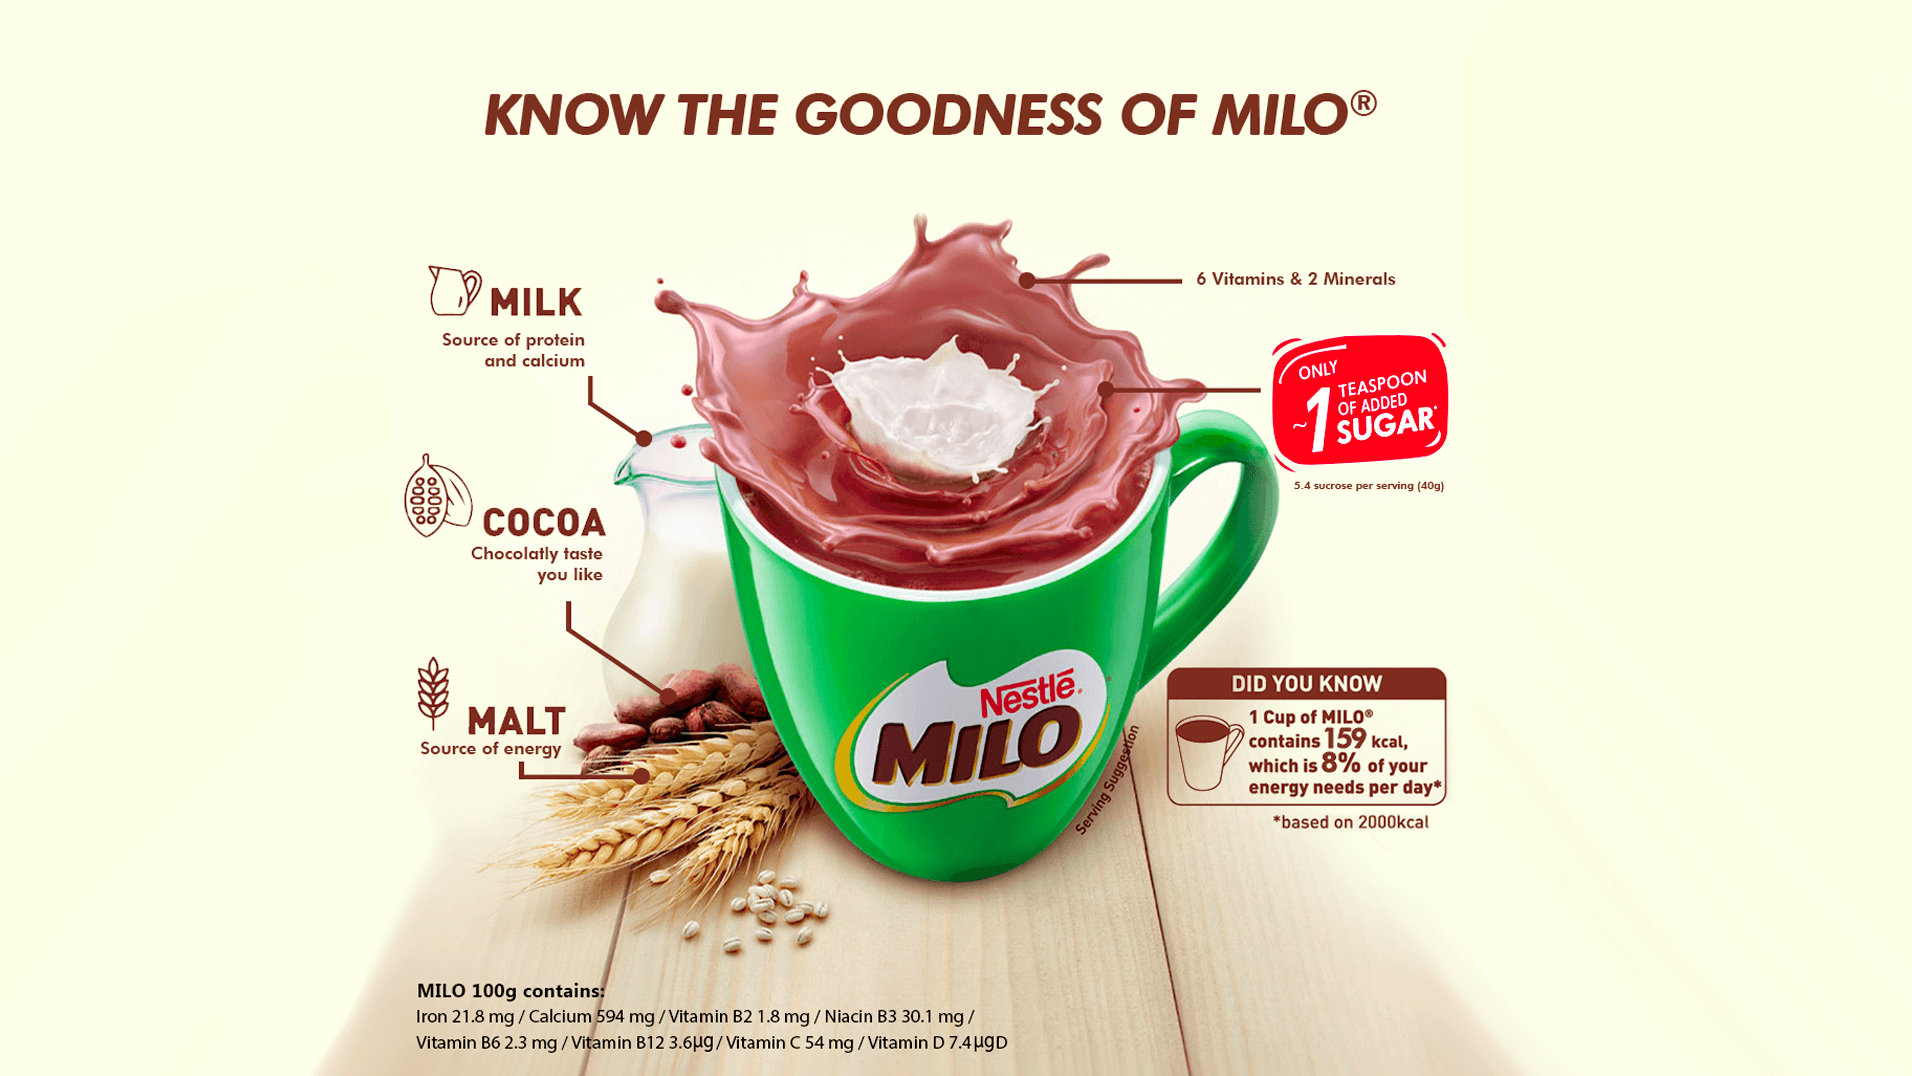 Know goodness of MILO®